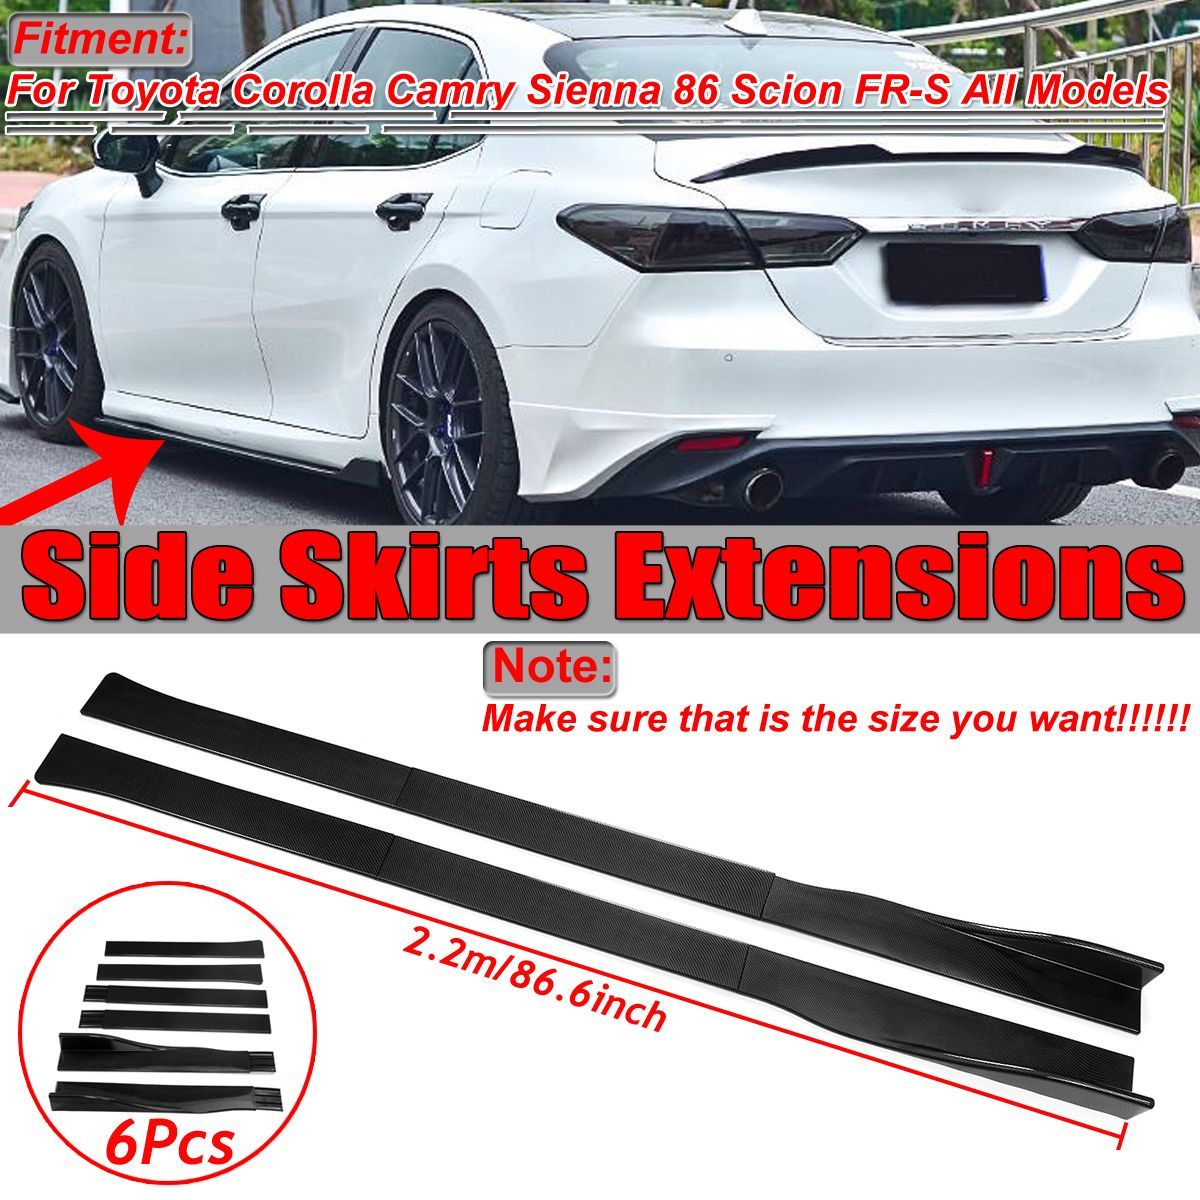 Carbon-Fiber-Pair-of-Car-Side-Skirt-Extensions-Splitters-For-LEXUS-Infiniti-1556977